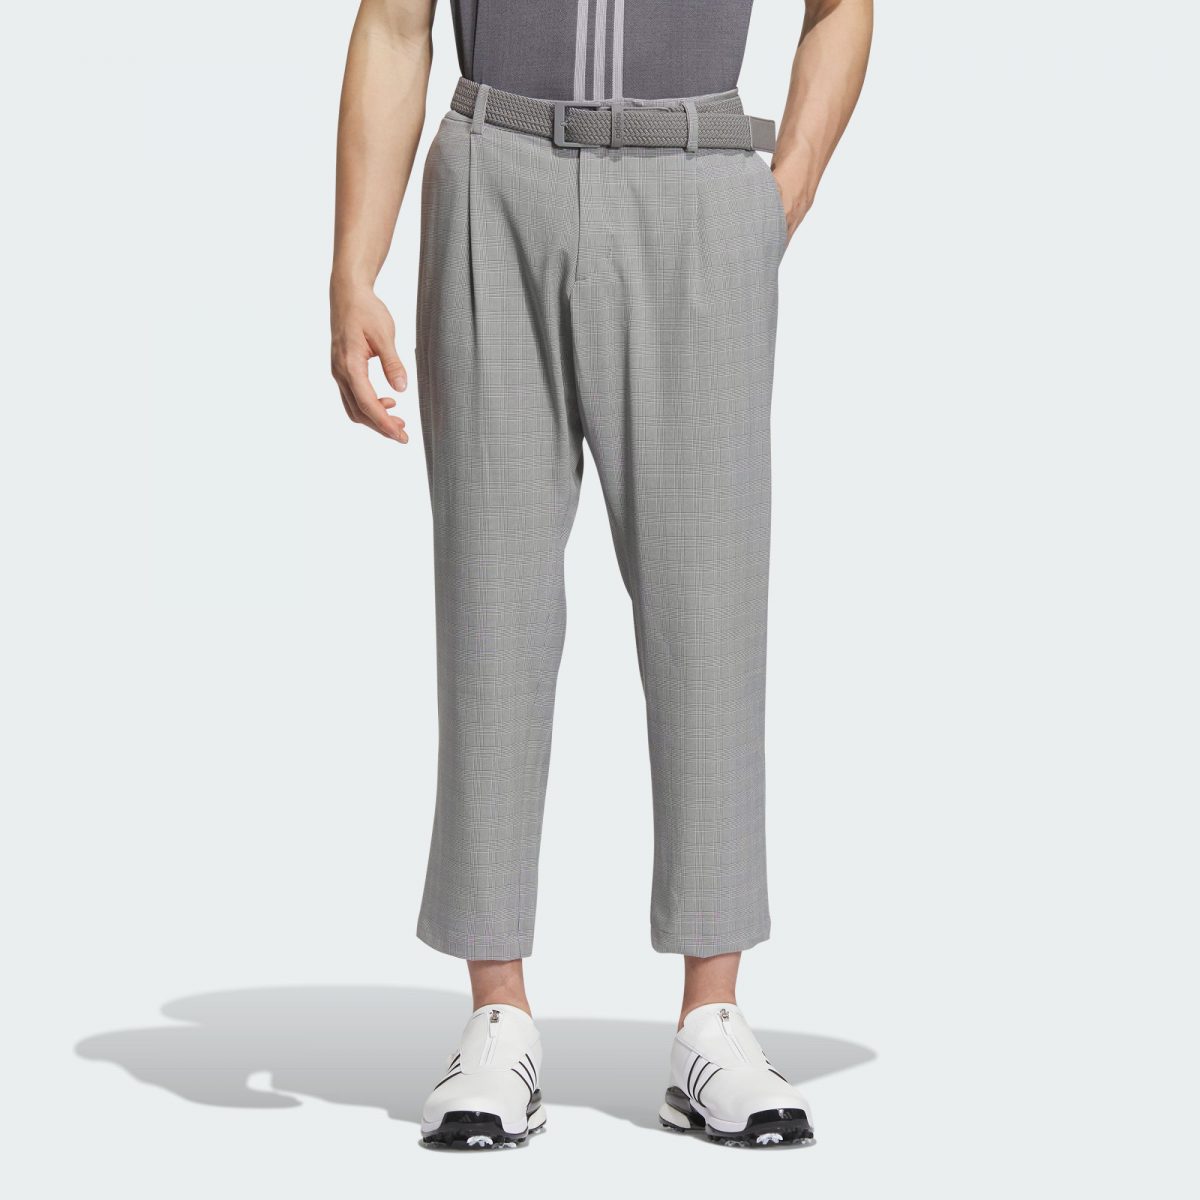 Мужские брюки adidas CHECKED PATTERN ANKLE PANTS фото